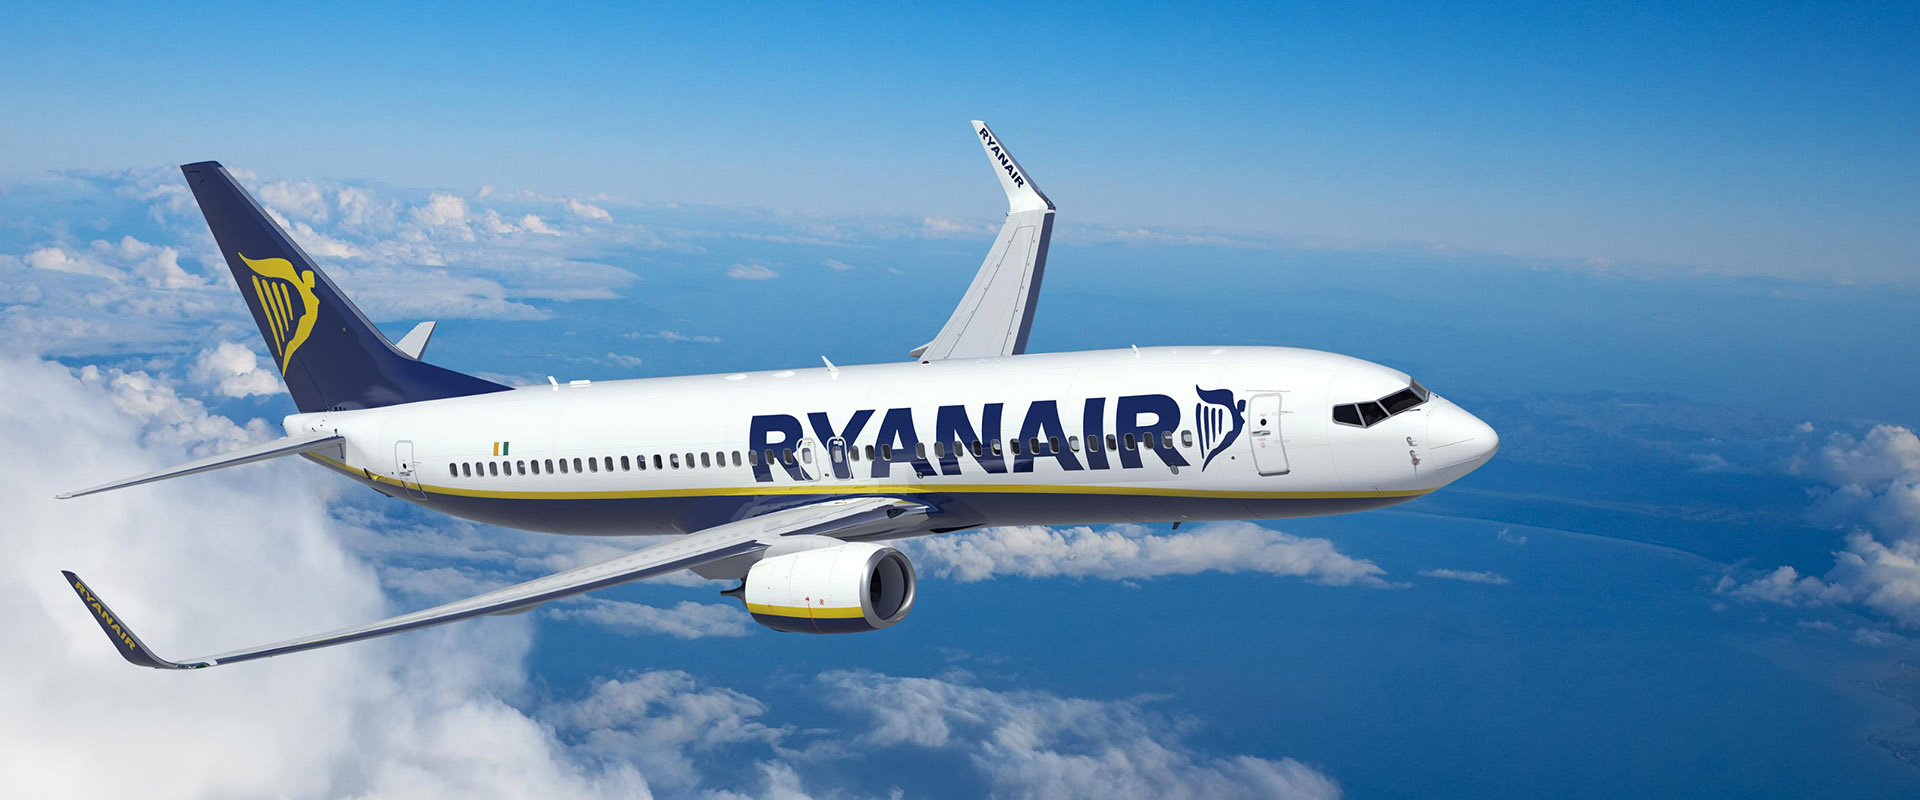 Ryanair Launches Massive 24 Hour “Million-Air” Sale  1 Million Seats For Just £9.99